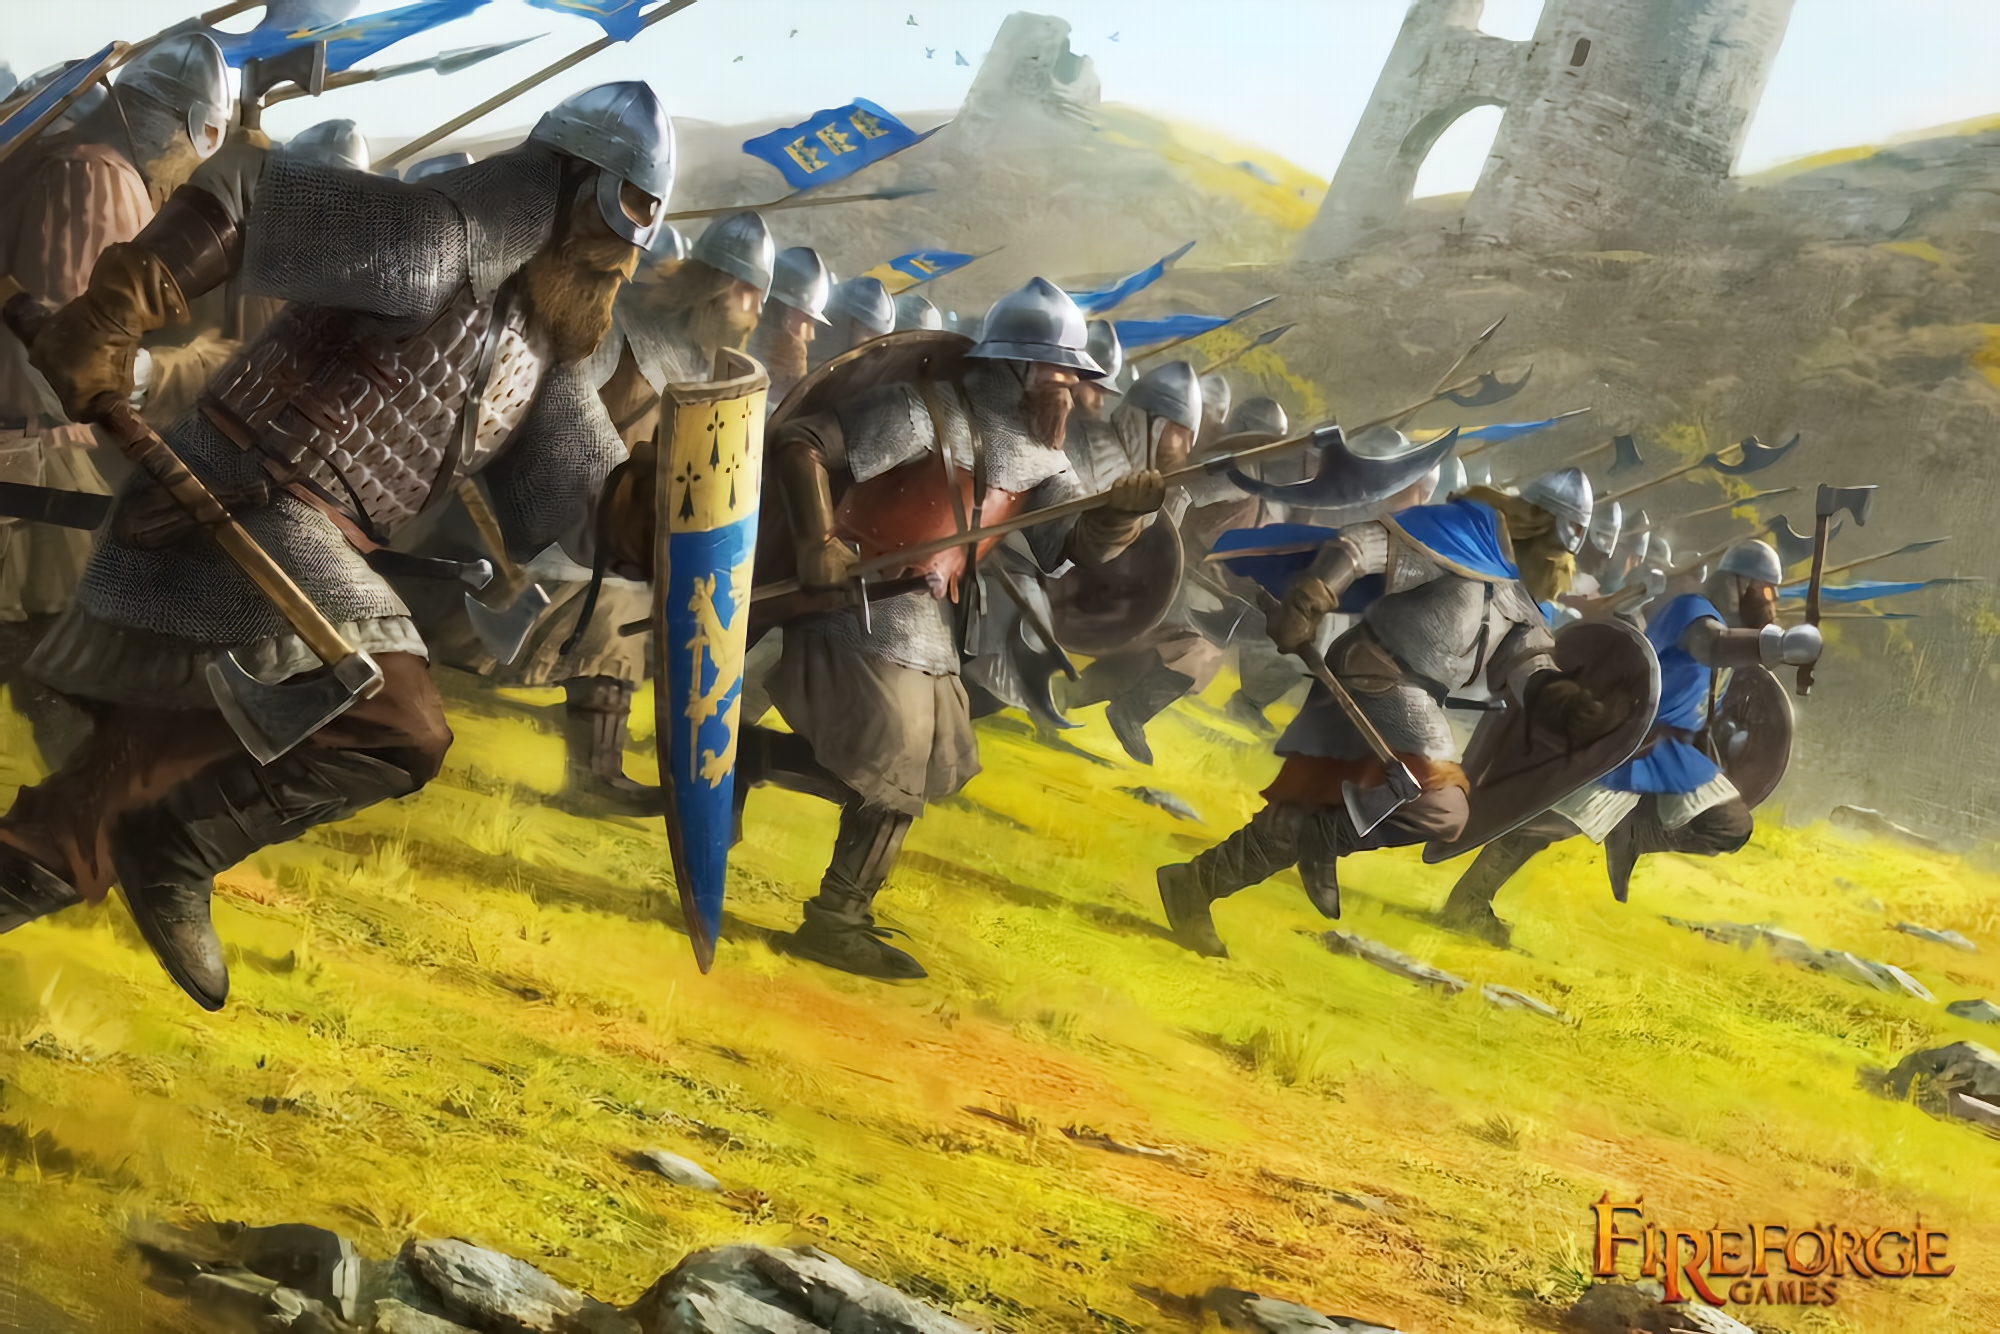 General 2000x1334 digital art warrior knight army video game art landscape men armor shield running axes flag helmet video games ameeeeba